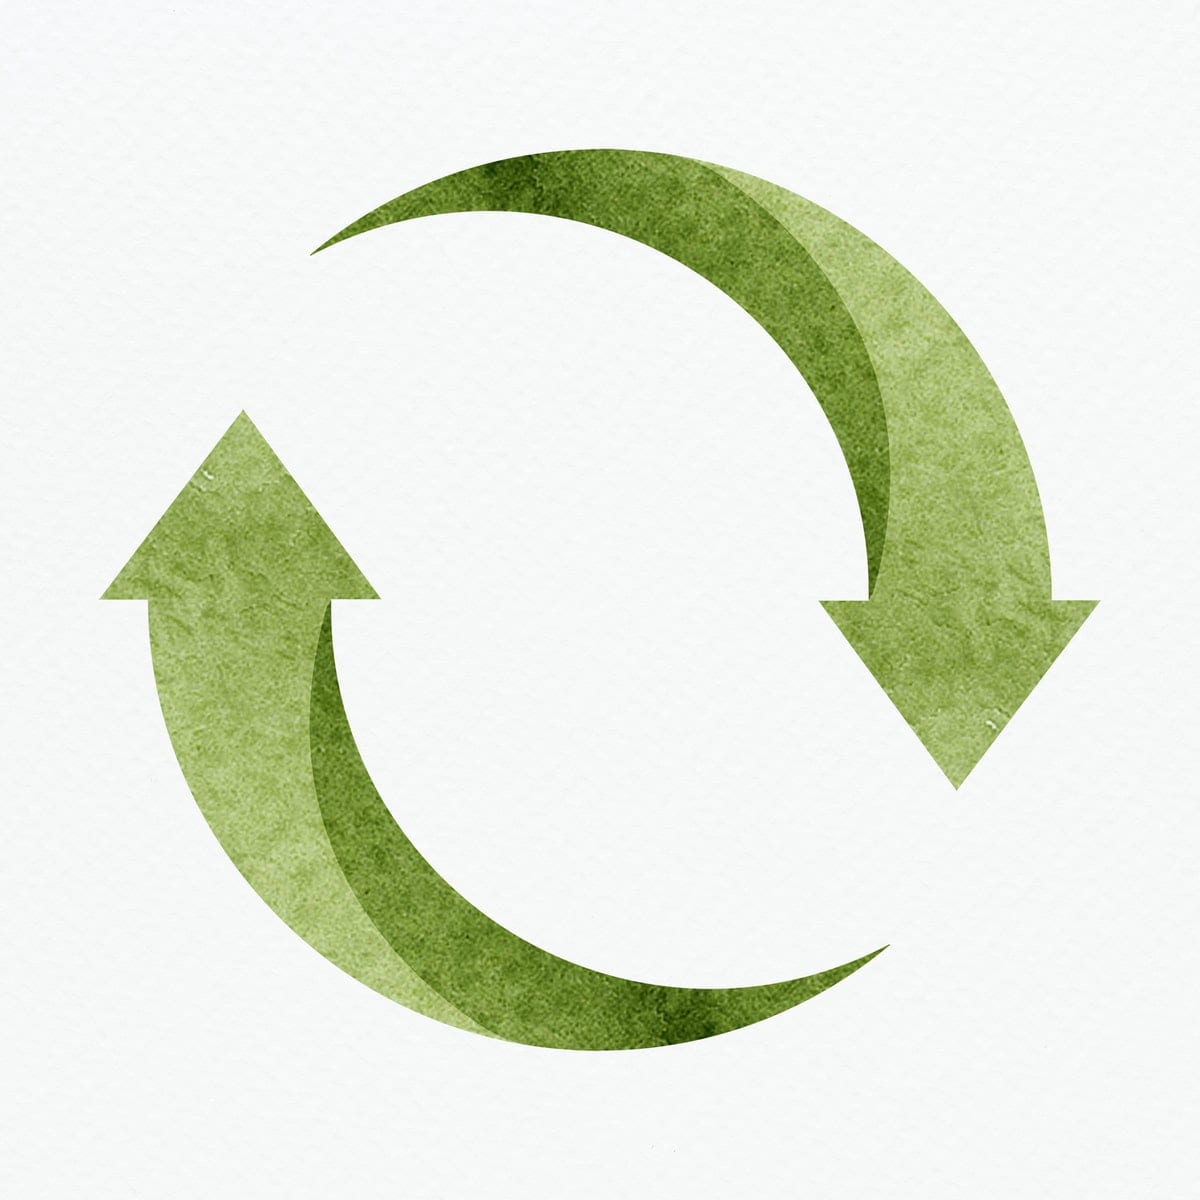 Green recycling symbol psd design element